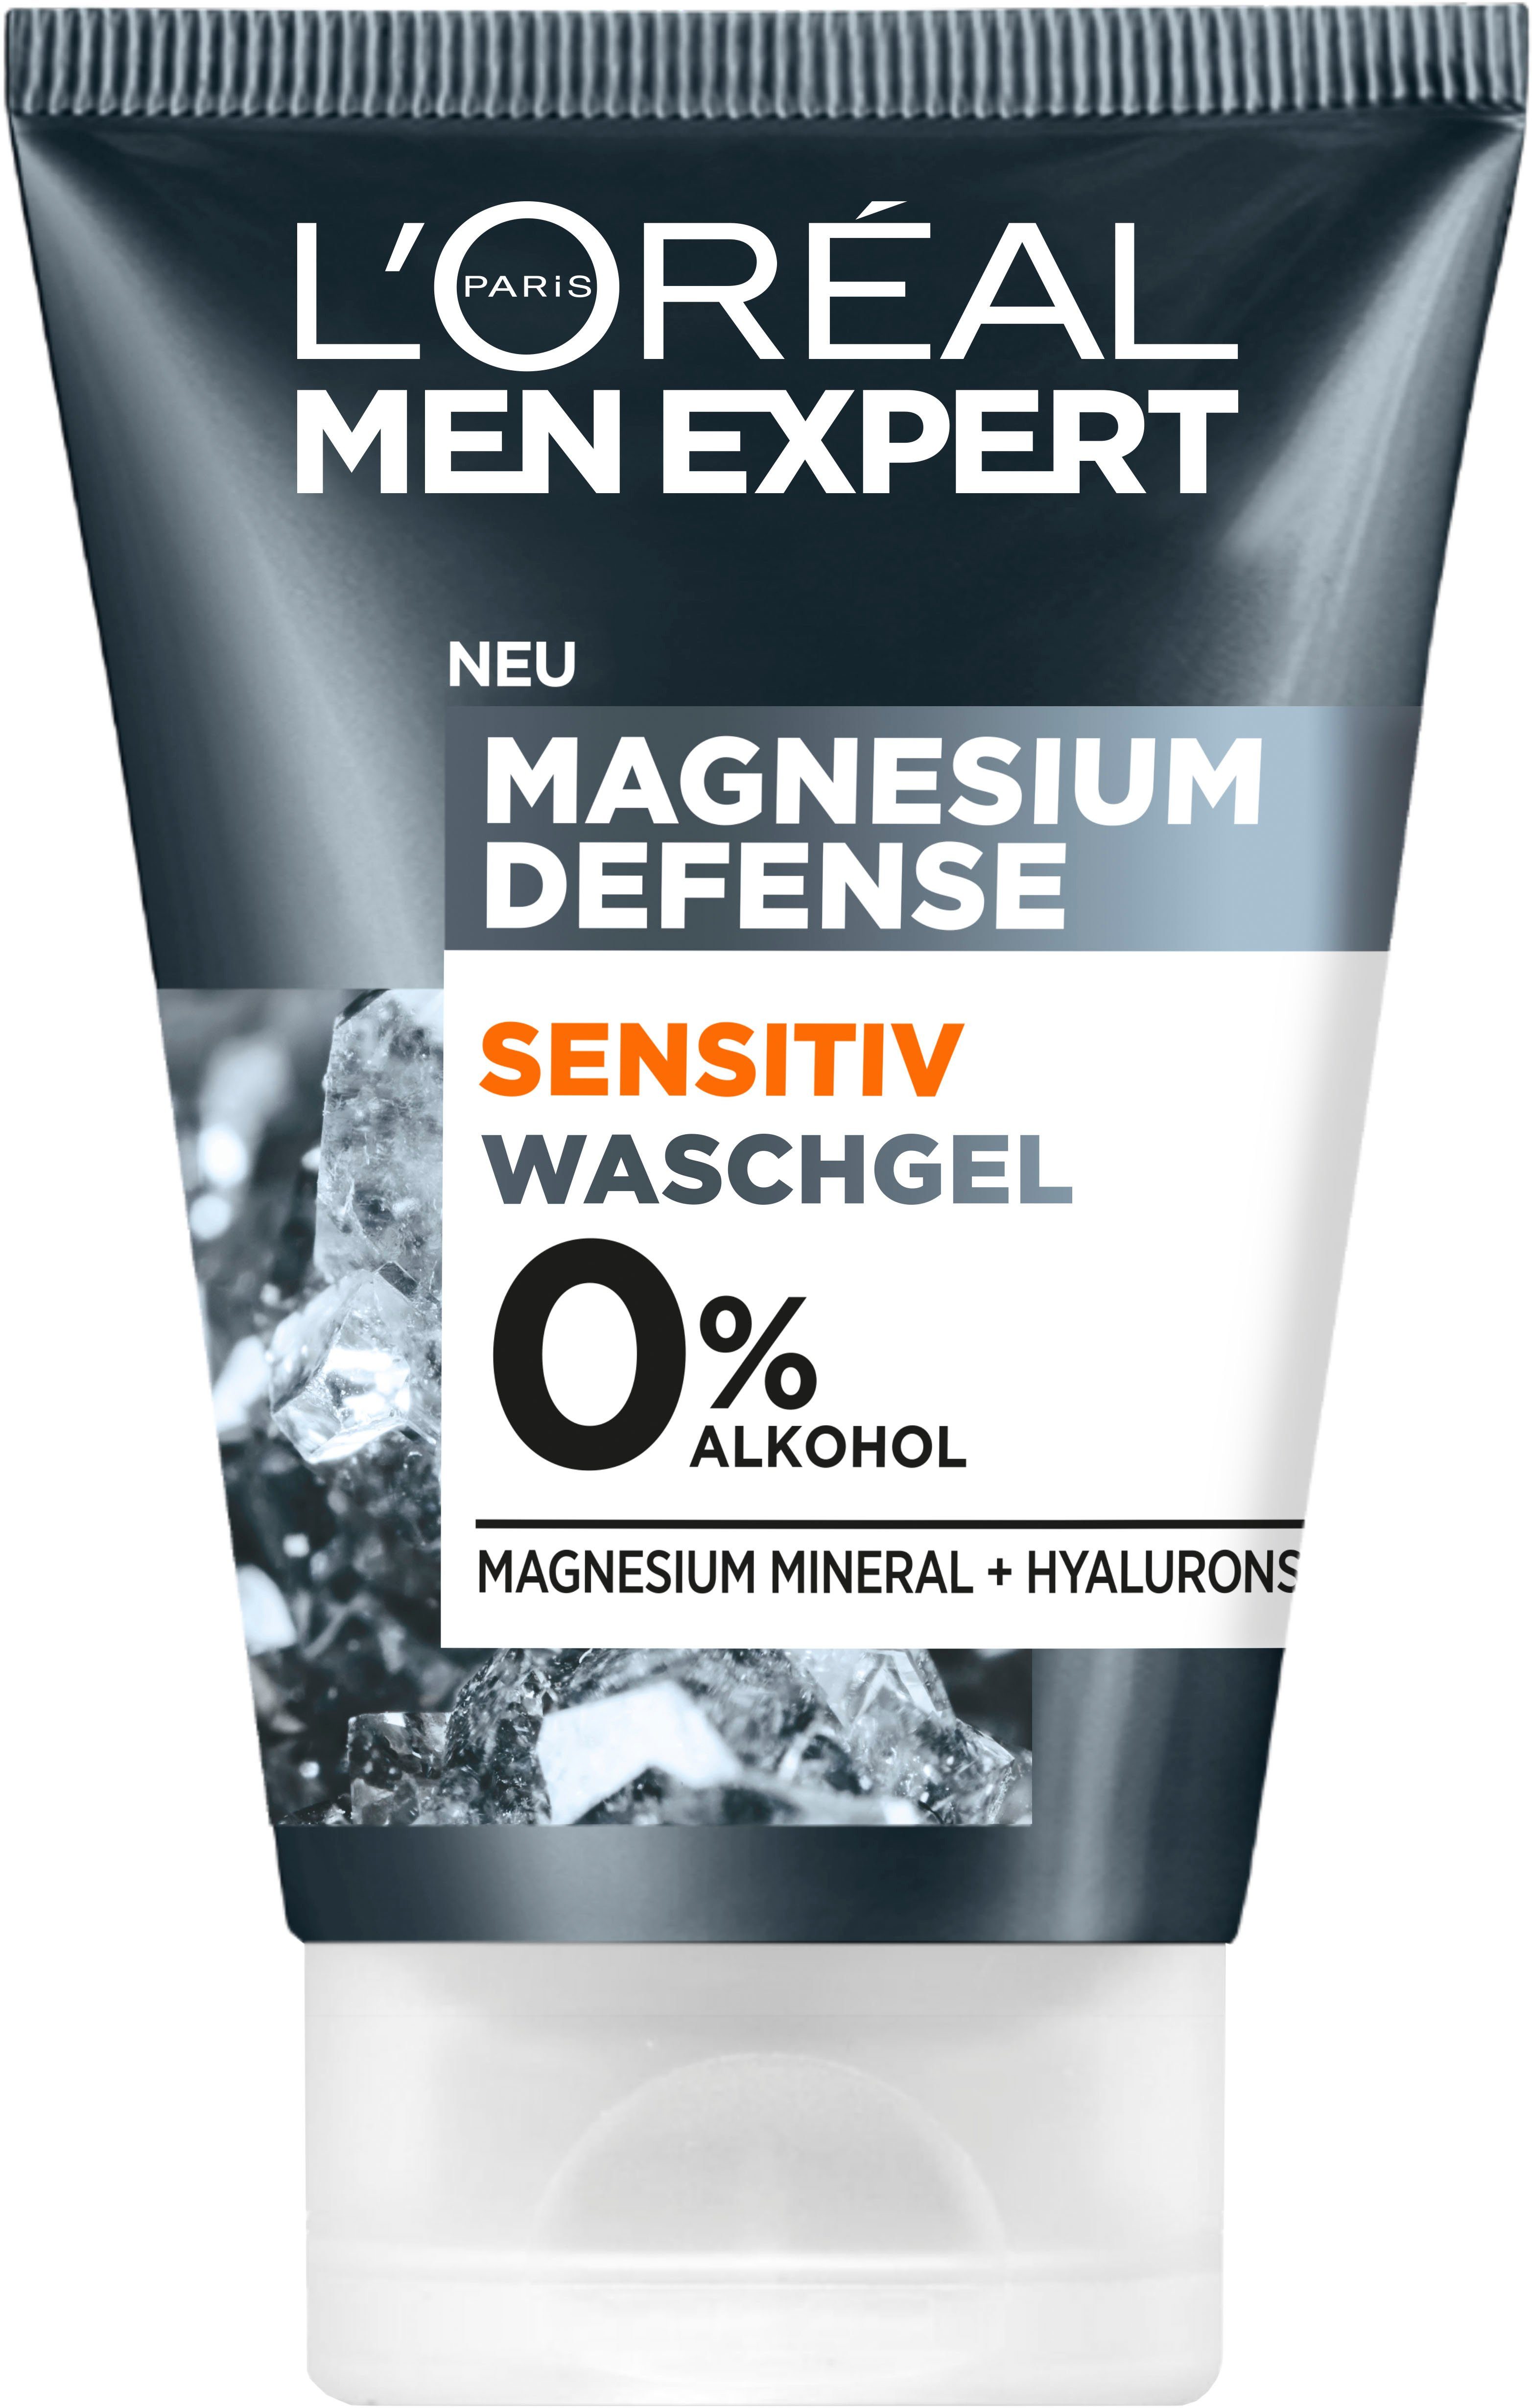 Waschgel Gesichtsreinigungsgel Magnesium Sensitiv PARIS Defense MEN L'ORÉAL EXPERT